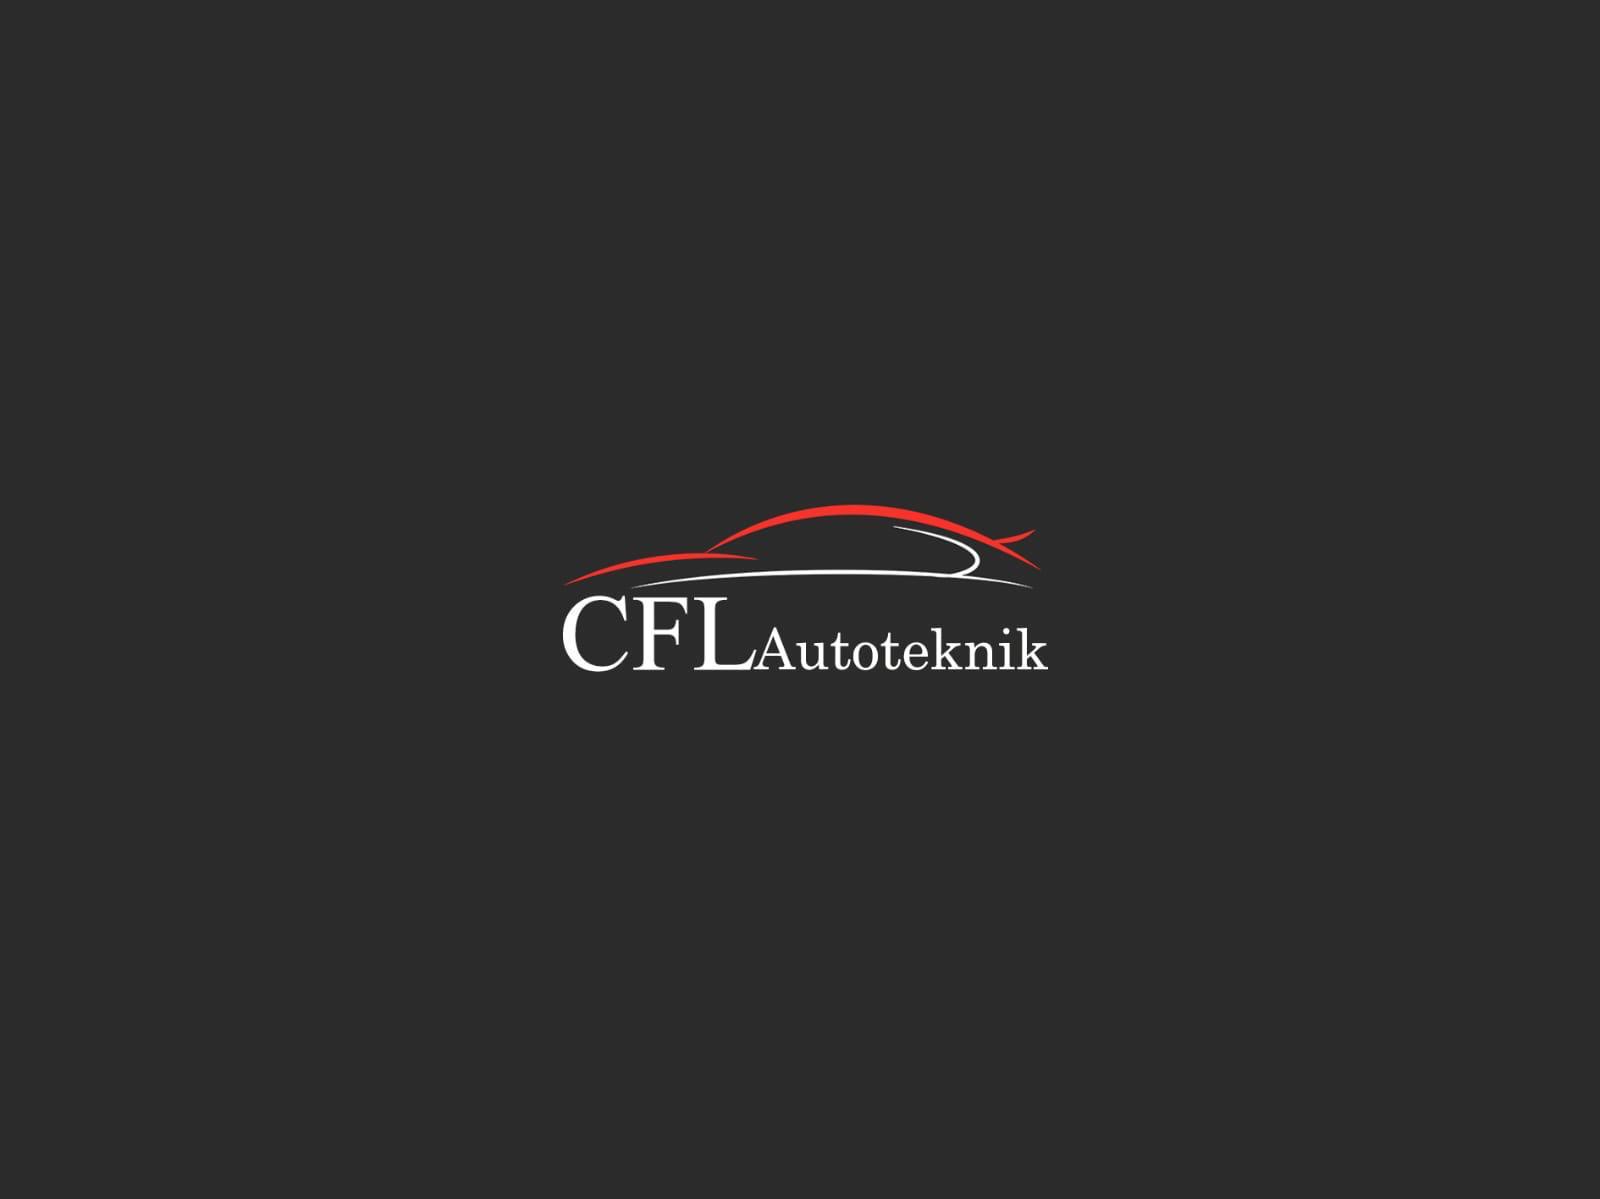 CFL Autoteknik - City Car Service logo